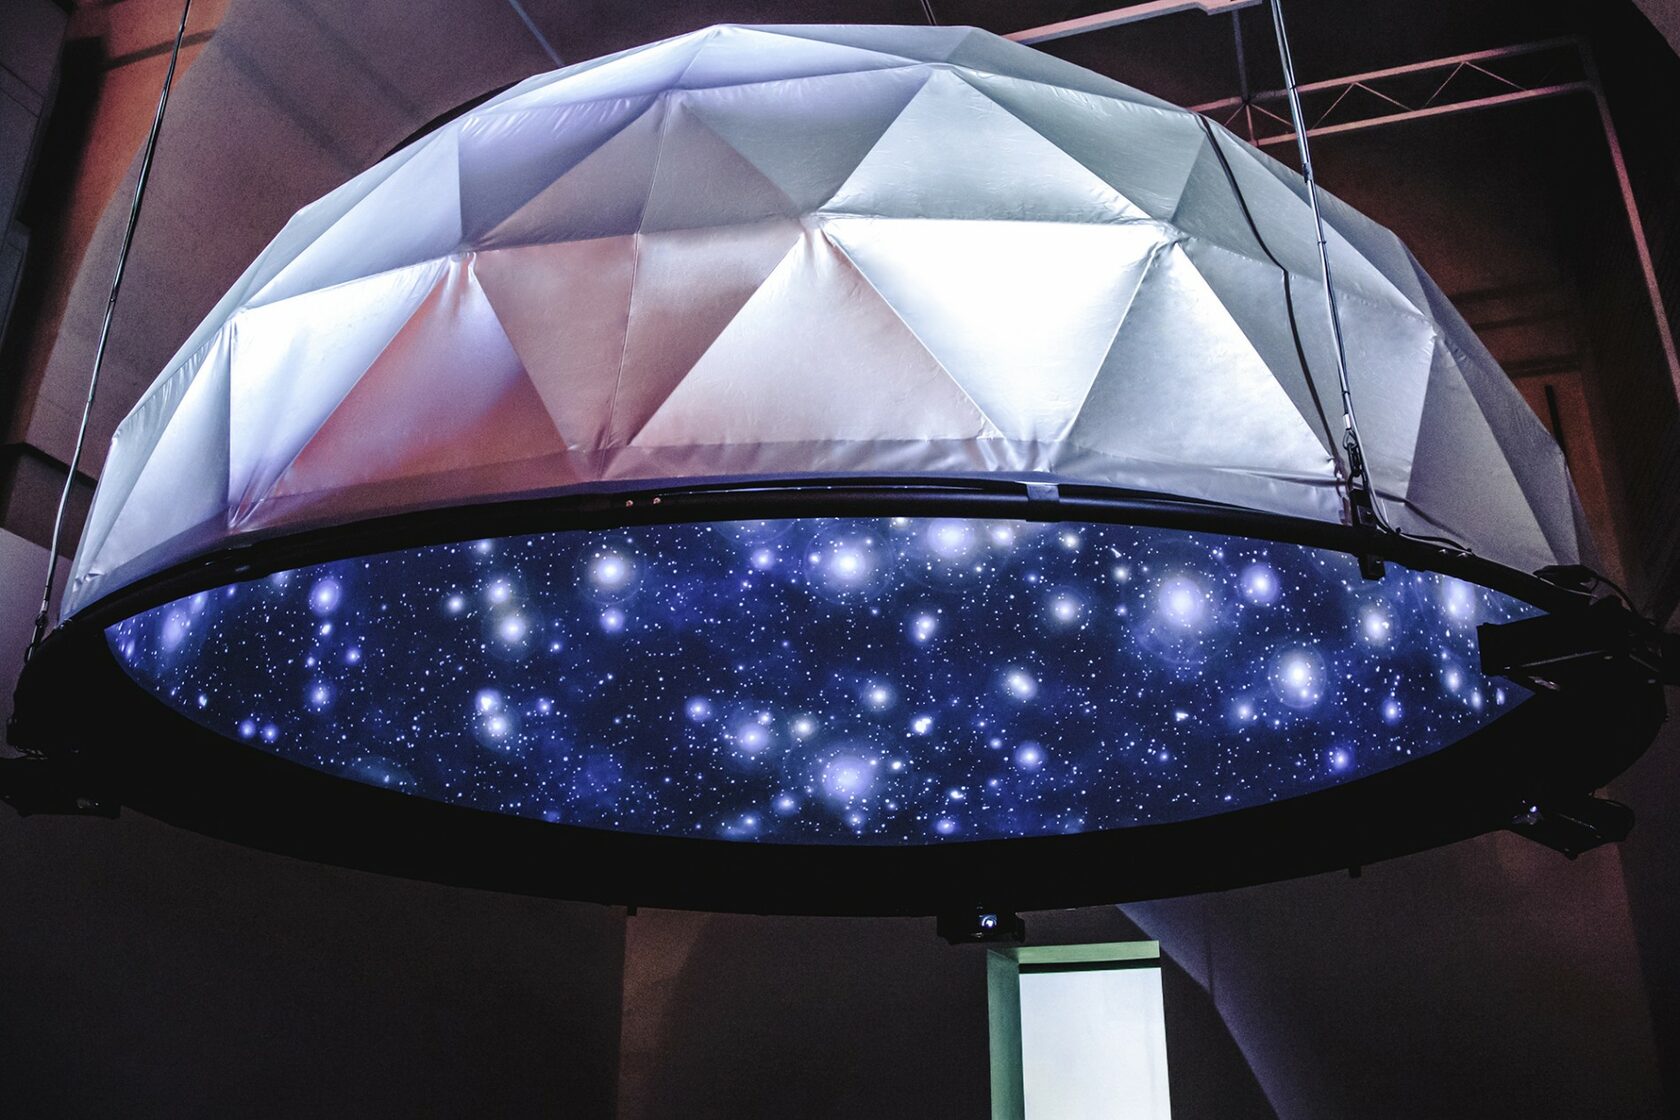 open dome, открытый каркасный купол, купольный экран, экран для выставок, экран для презентаций, geodesic dome, geodesic planetarium